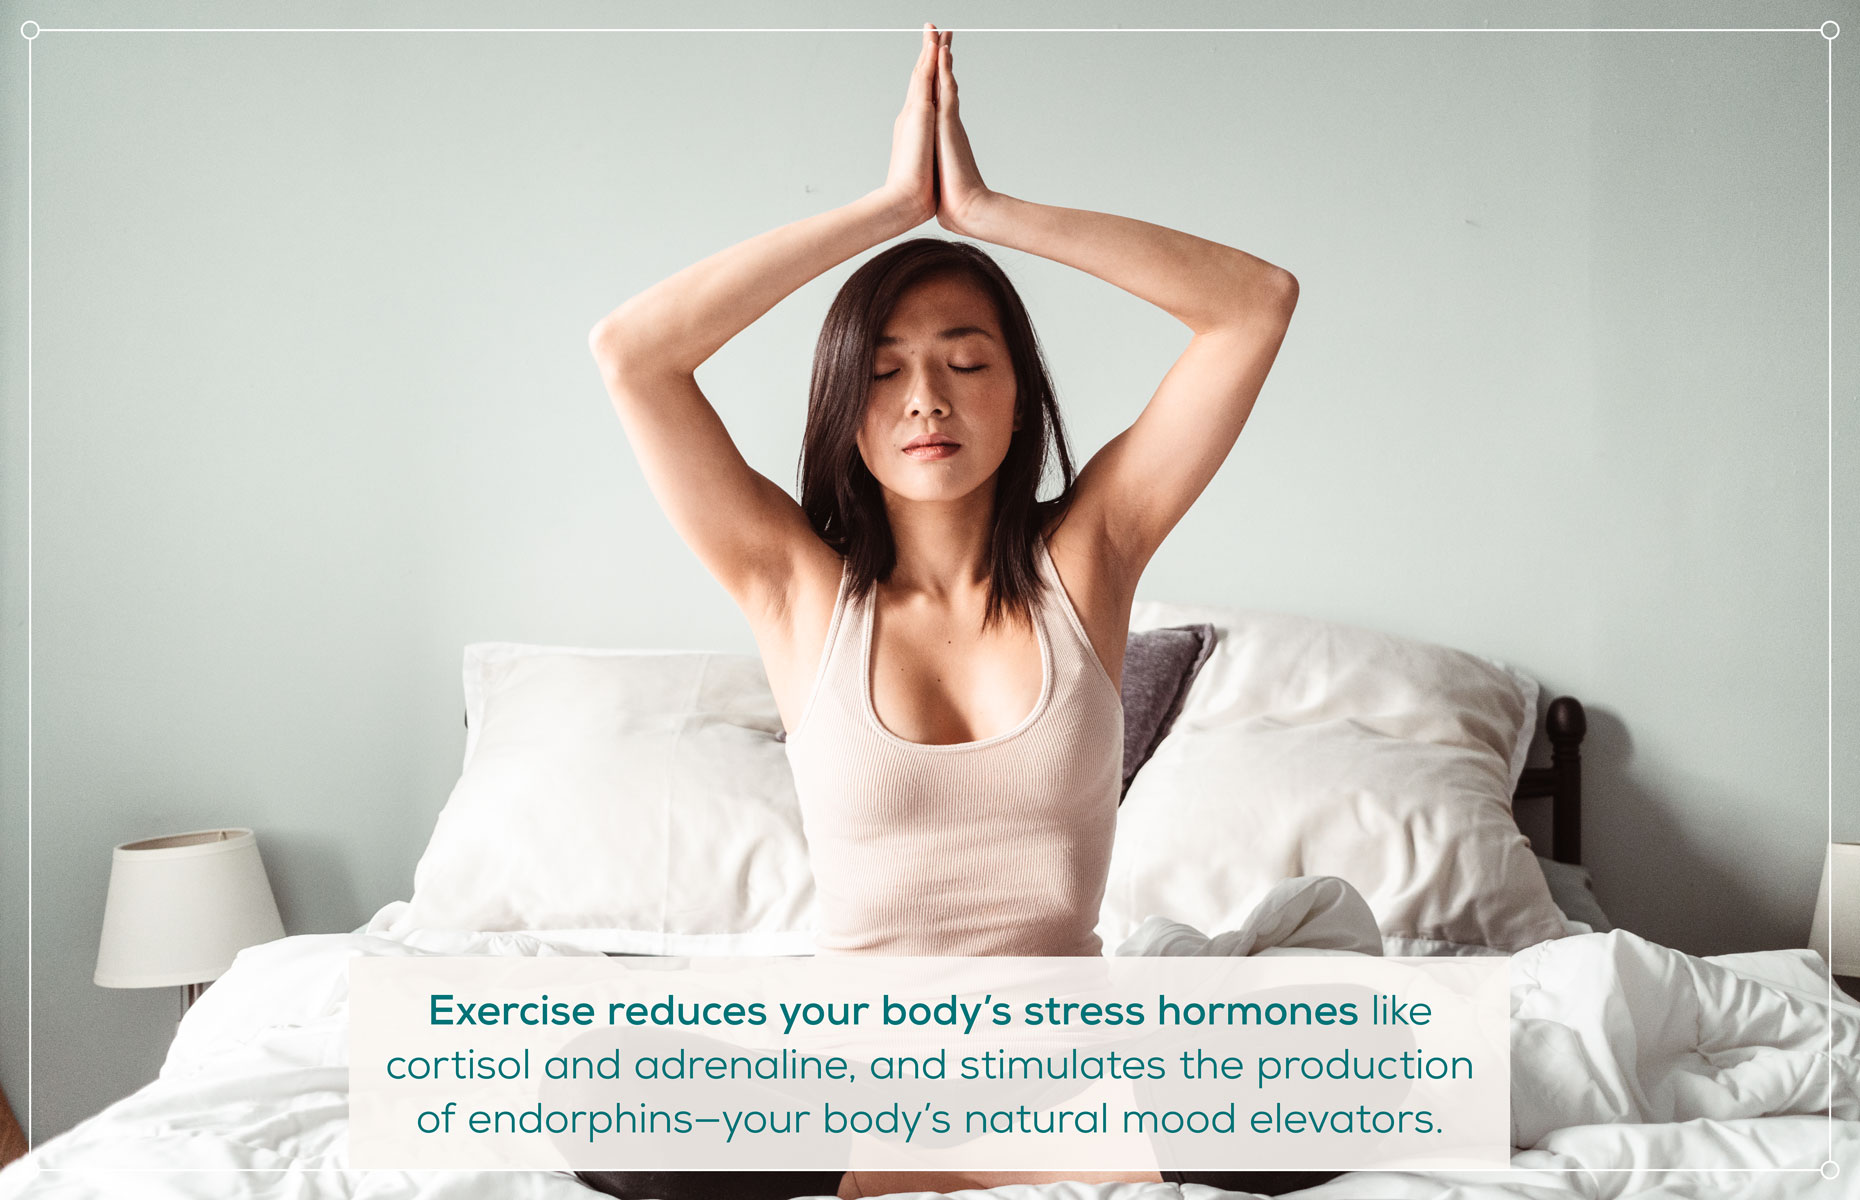 coronasomnia-exercise-reduces-stress